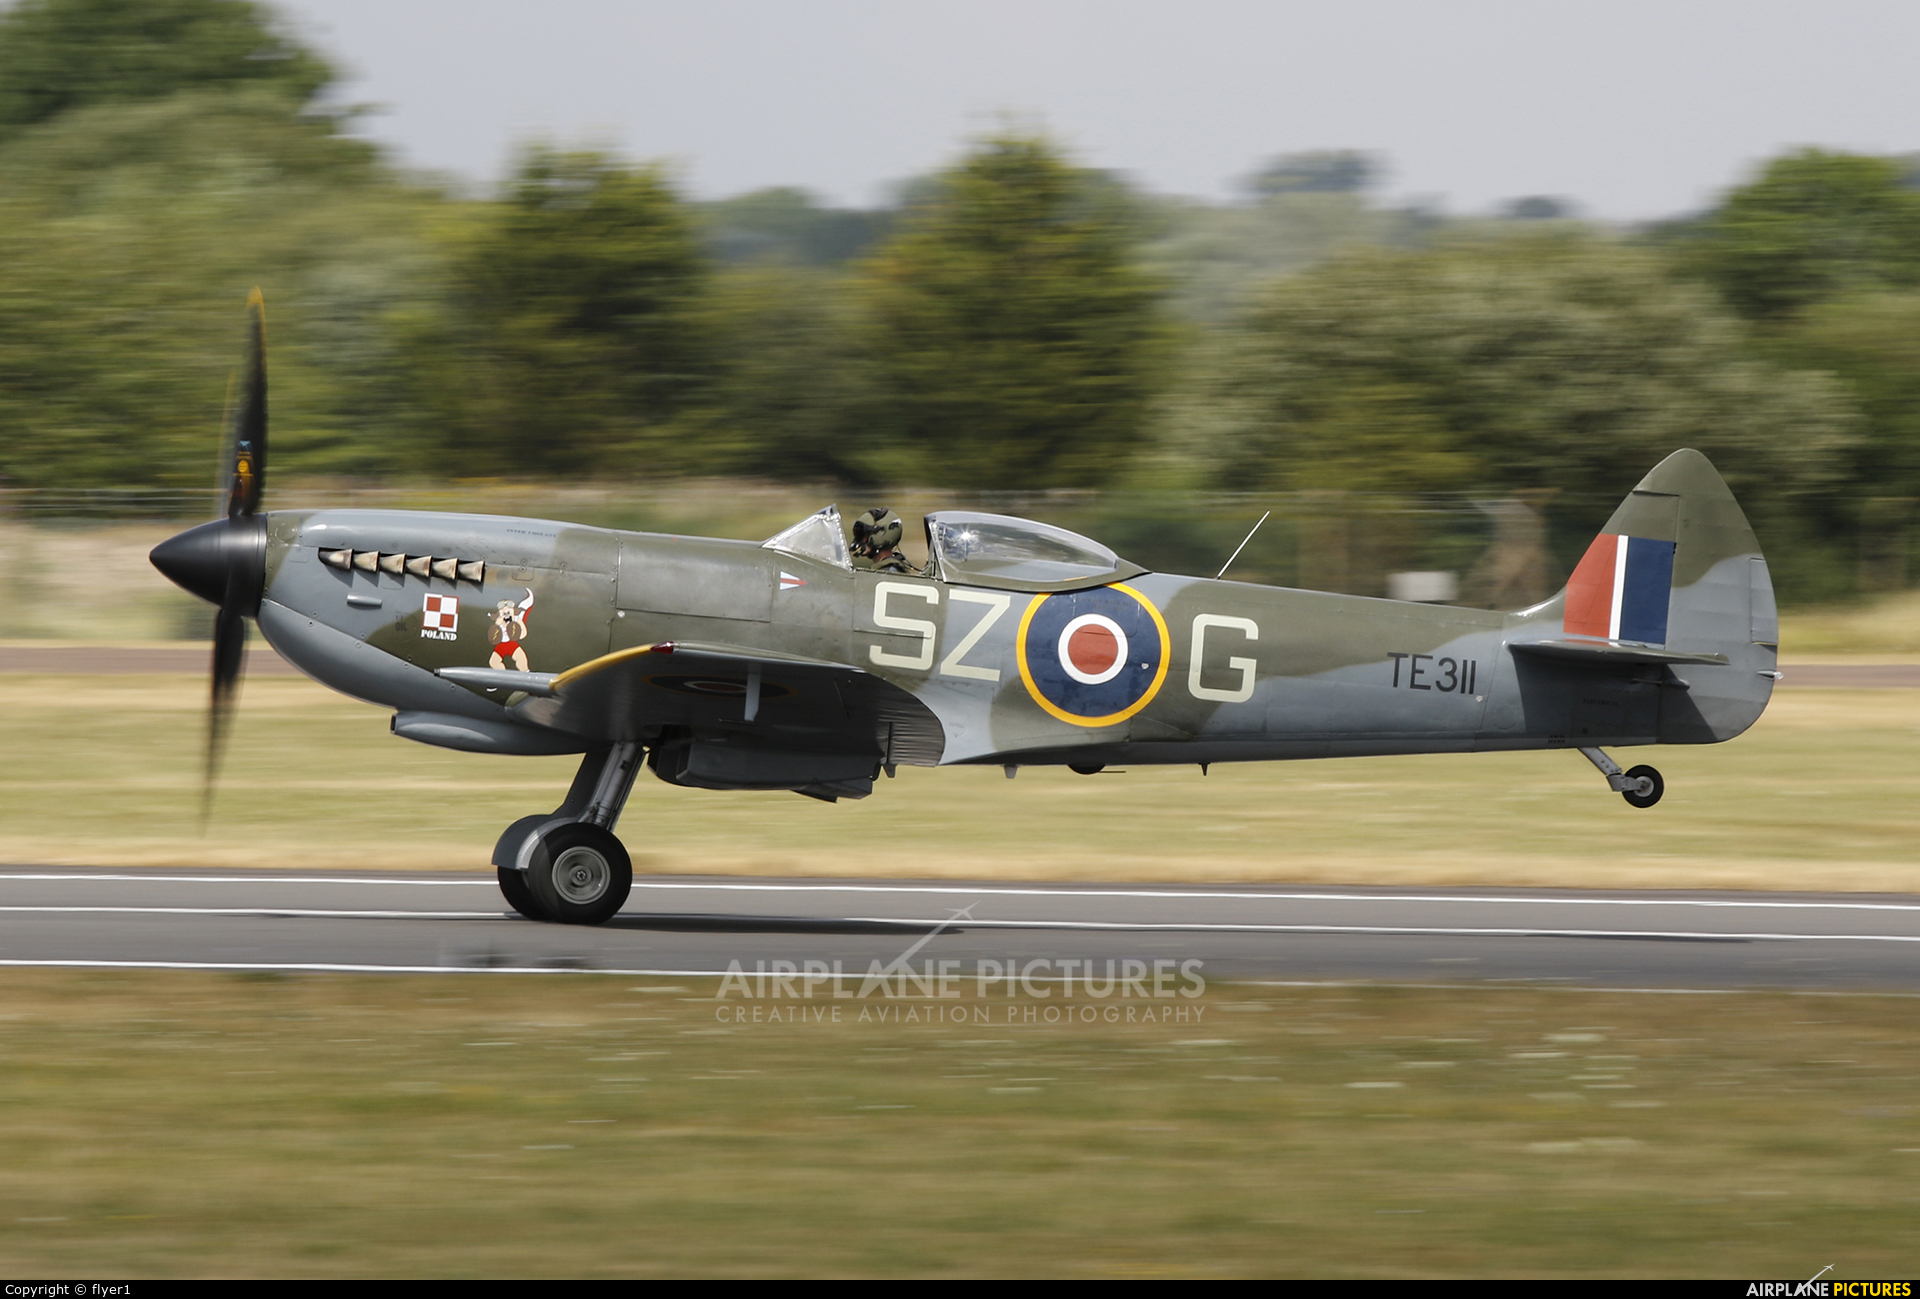 Royal Air Force "Battle of Britain Memorial Flight" TE311 aircraft at Fairford